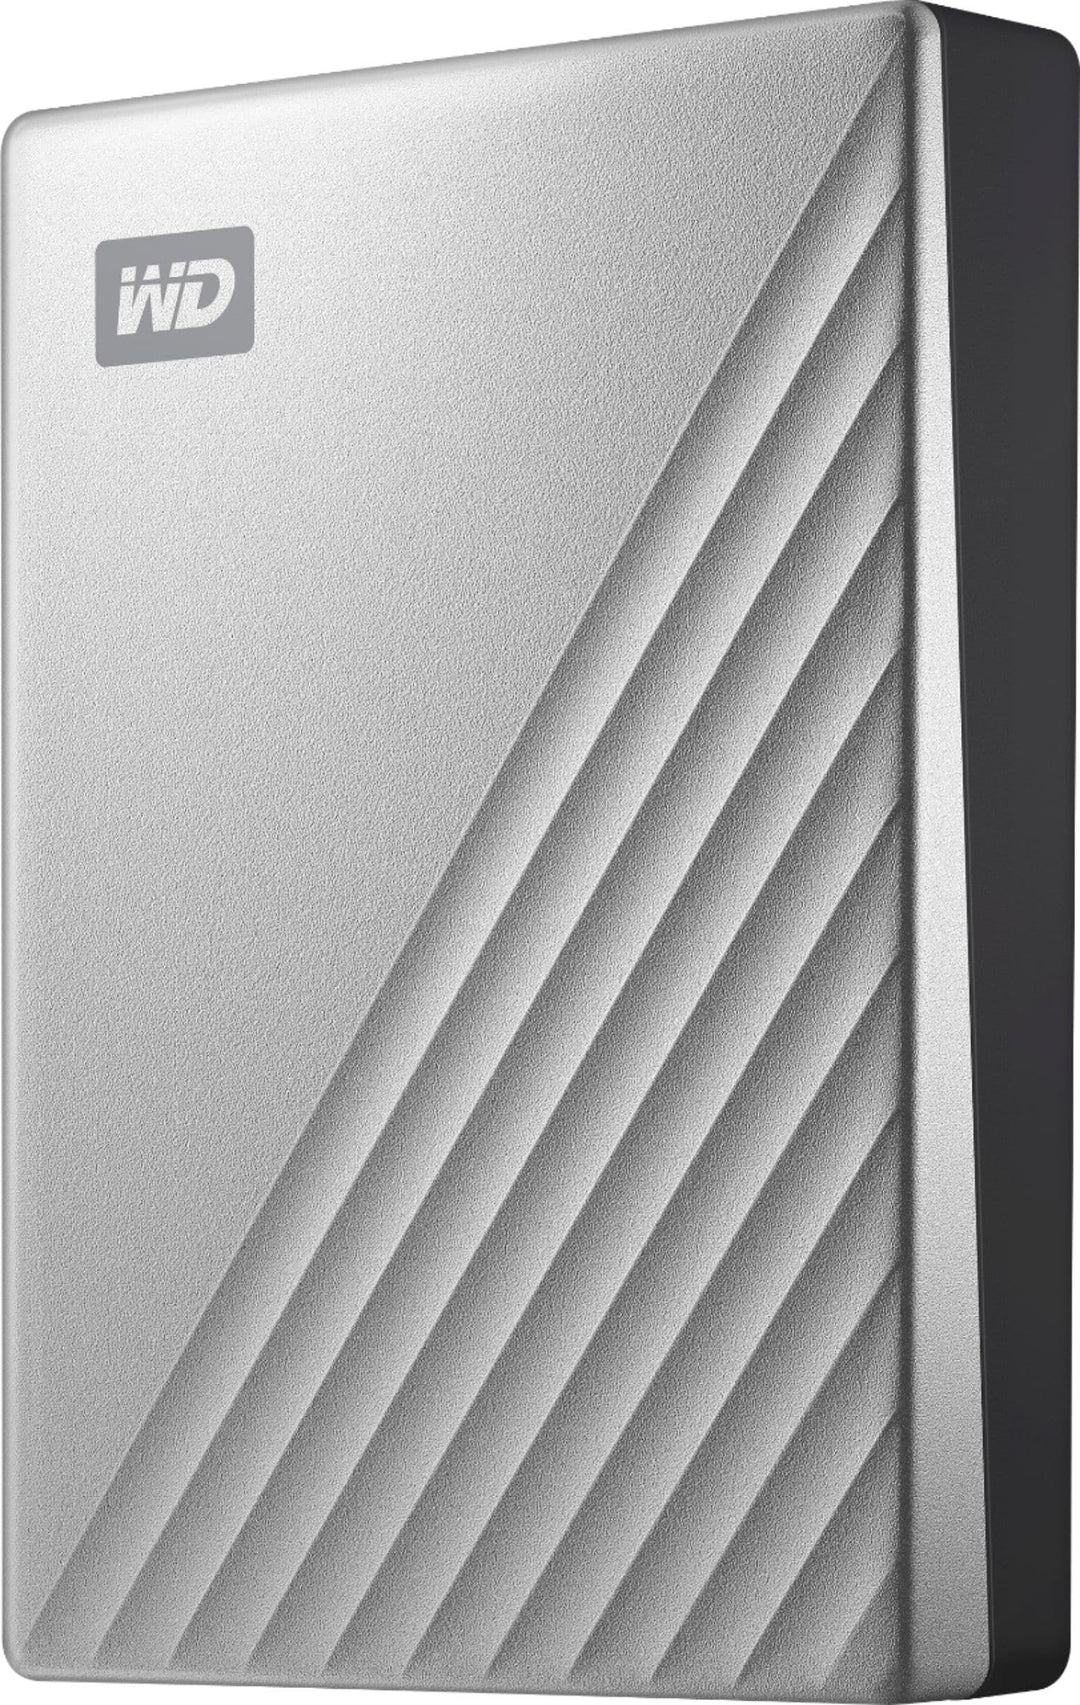 WD - My Passport Ultra for Mac 4TB External USB 3.0 Portable Hard Drive - Silver_0